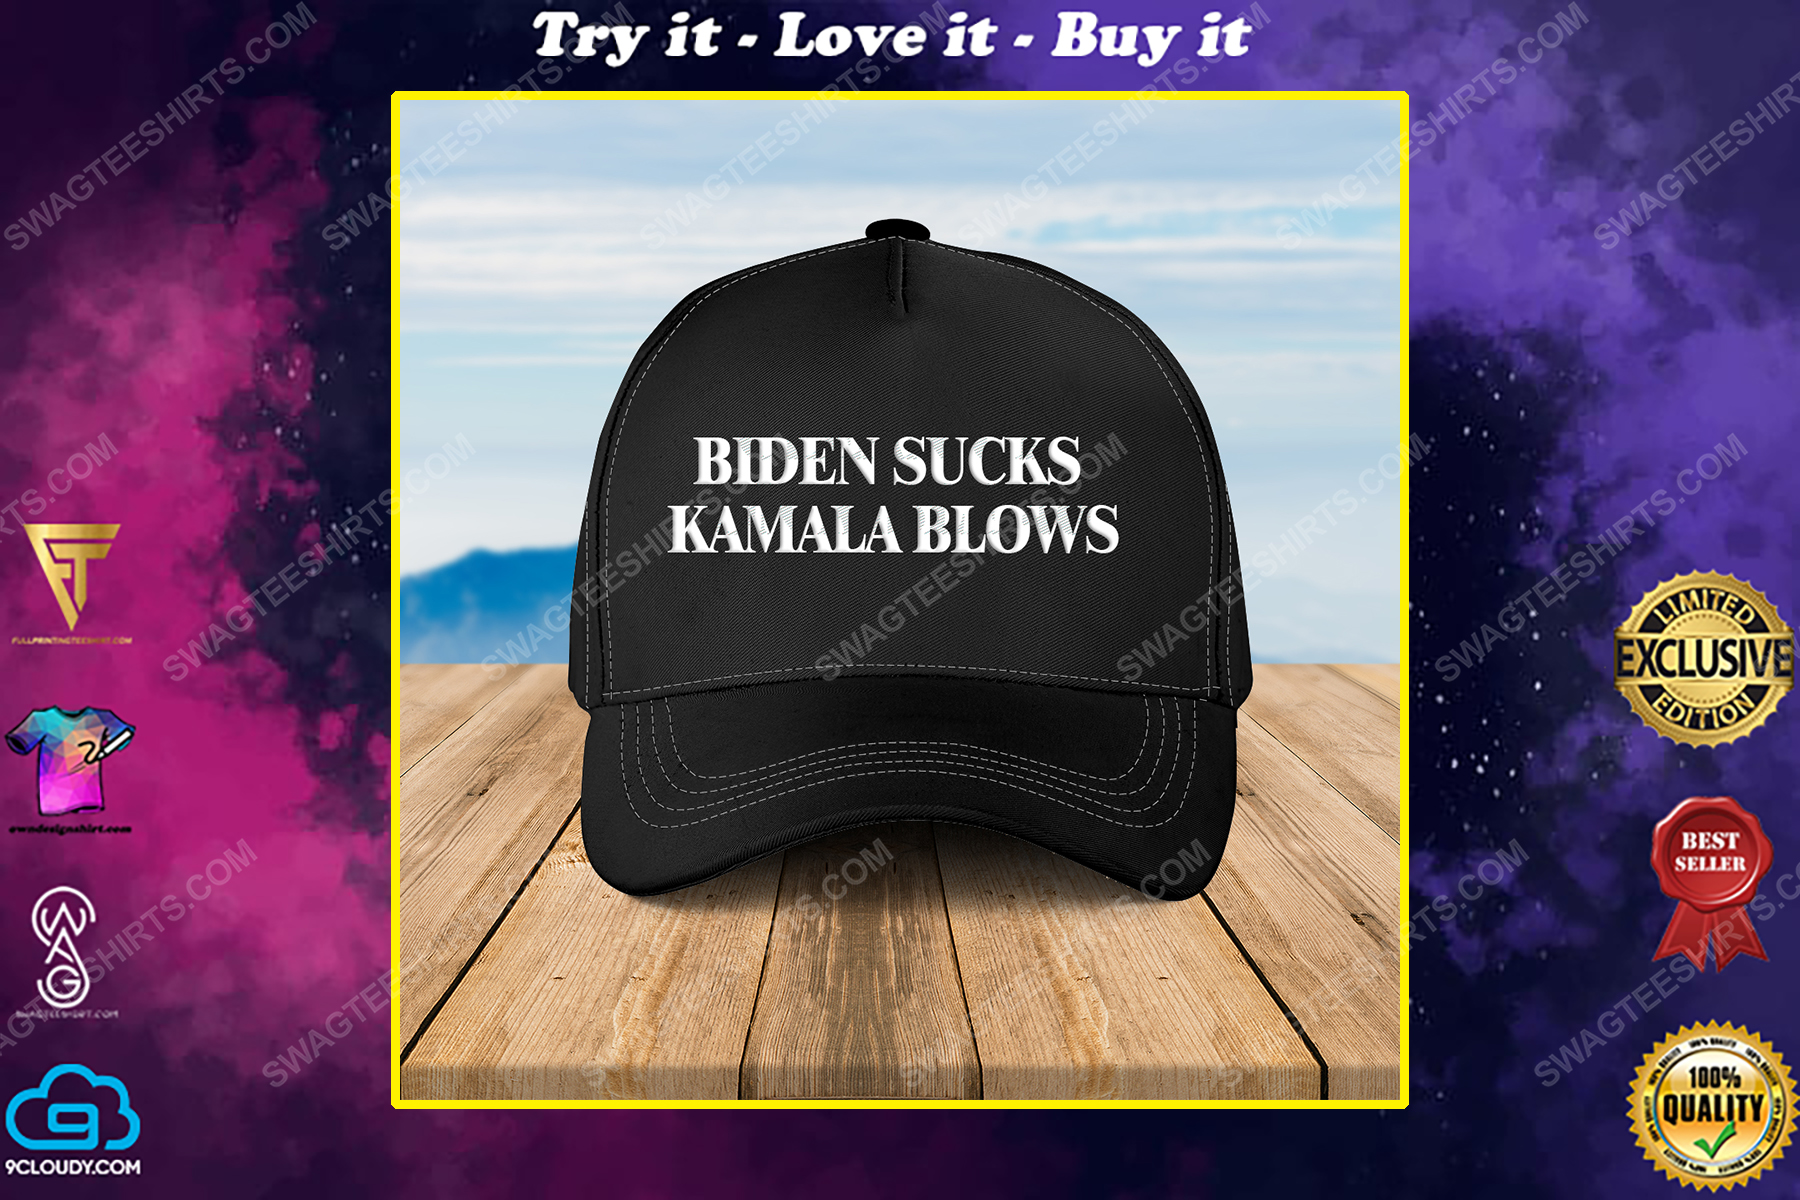 Biden sucks kamala blows full print classic hat